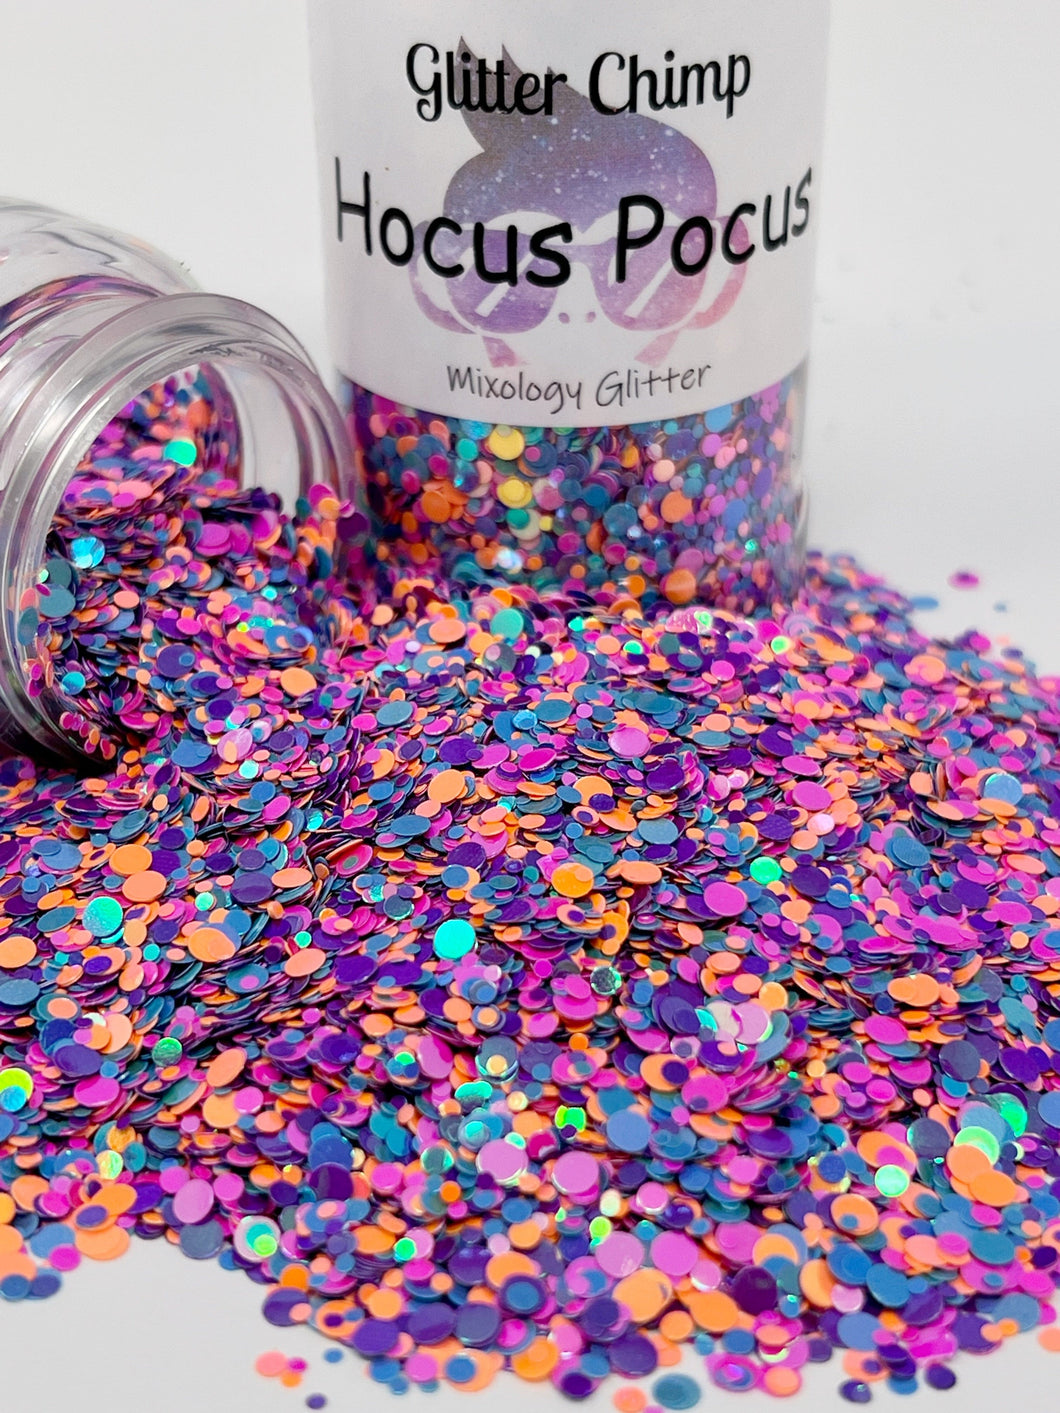 Hocus Pocus - Mixology Glitter